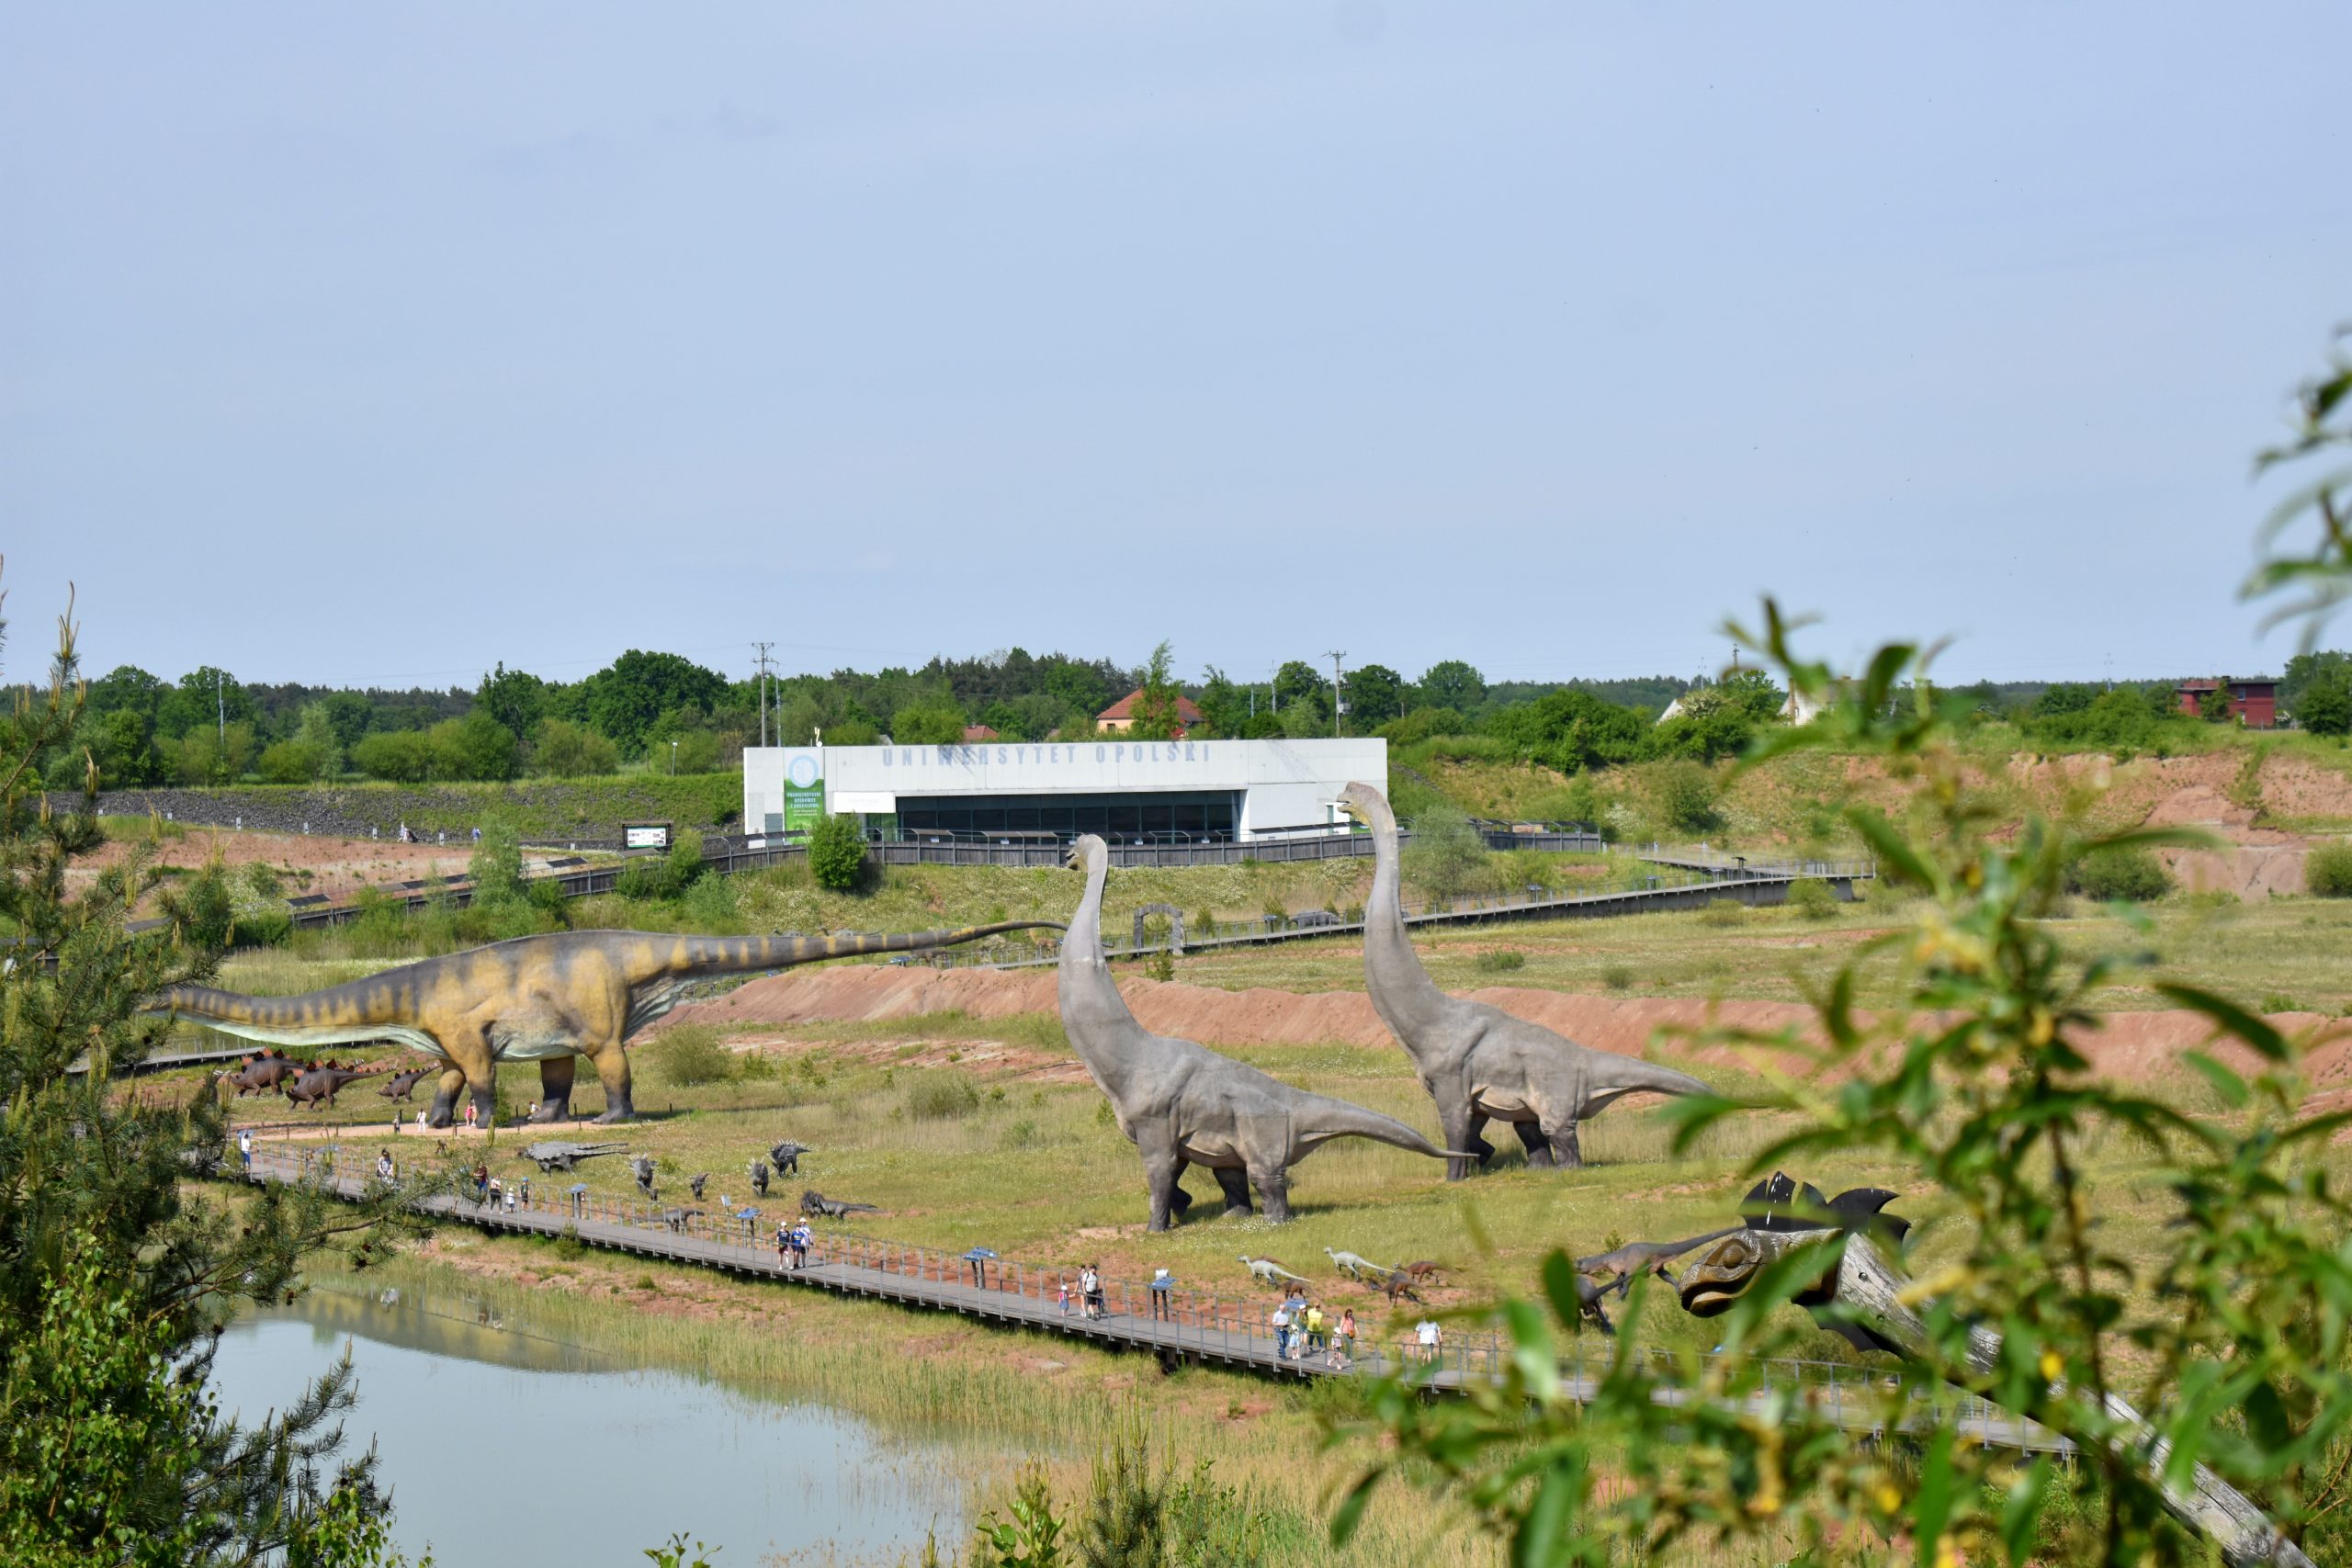 panorama ścieżki z dinozaurami